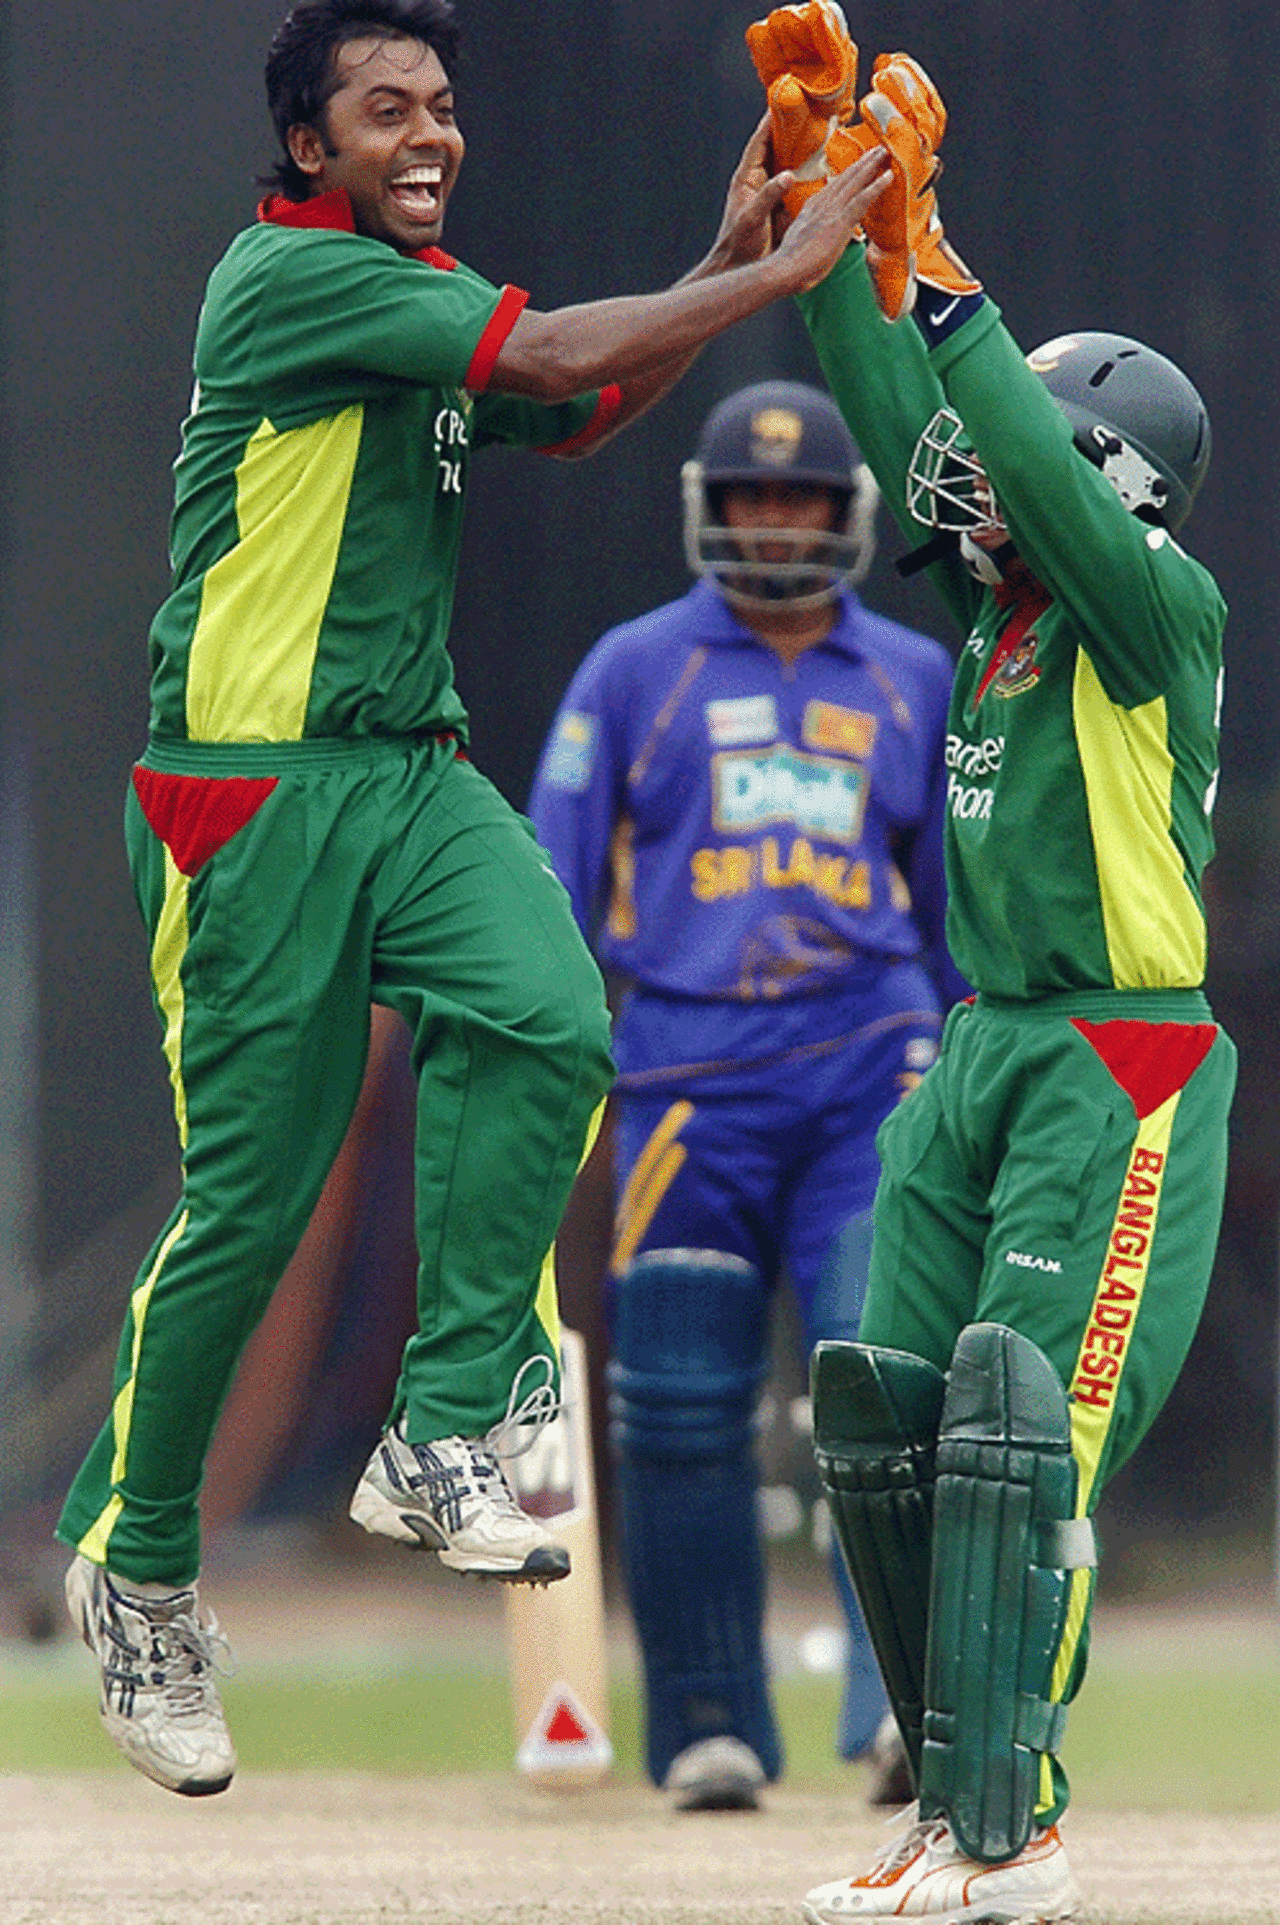 Syed Rasel celebrates after getting Kumar Sangakkara caught behind for six, Sri Lanka v Bangladesh, 2nd ODI, Colombo, July 23, 2007